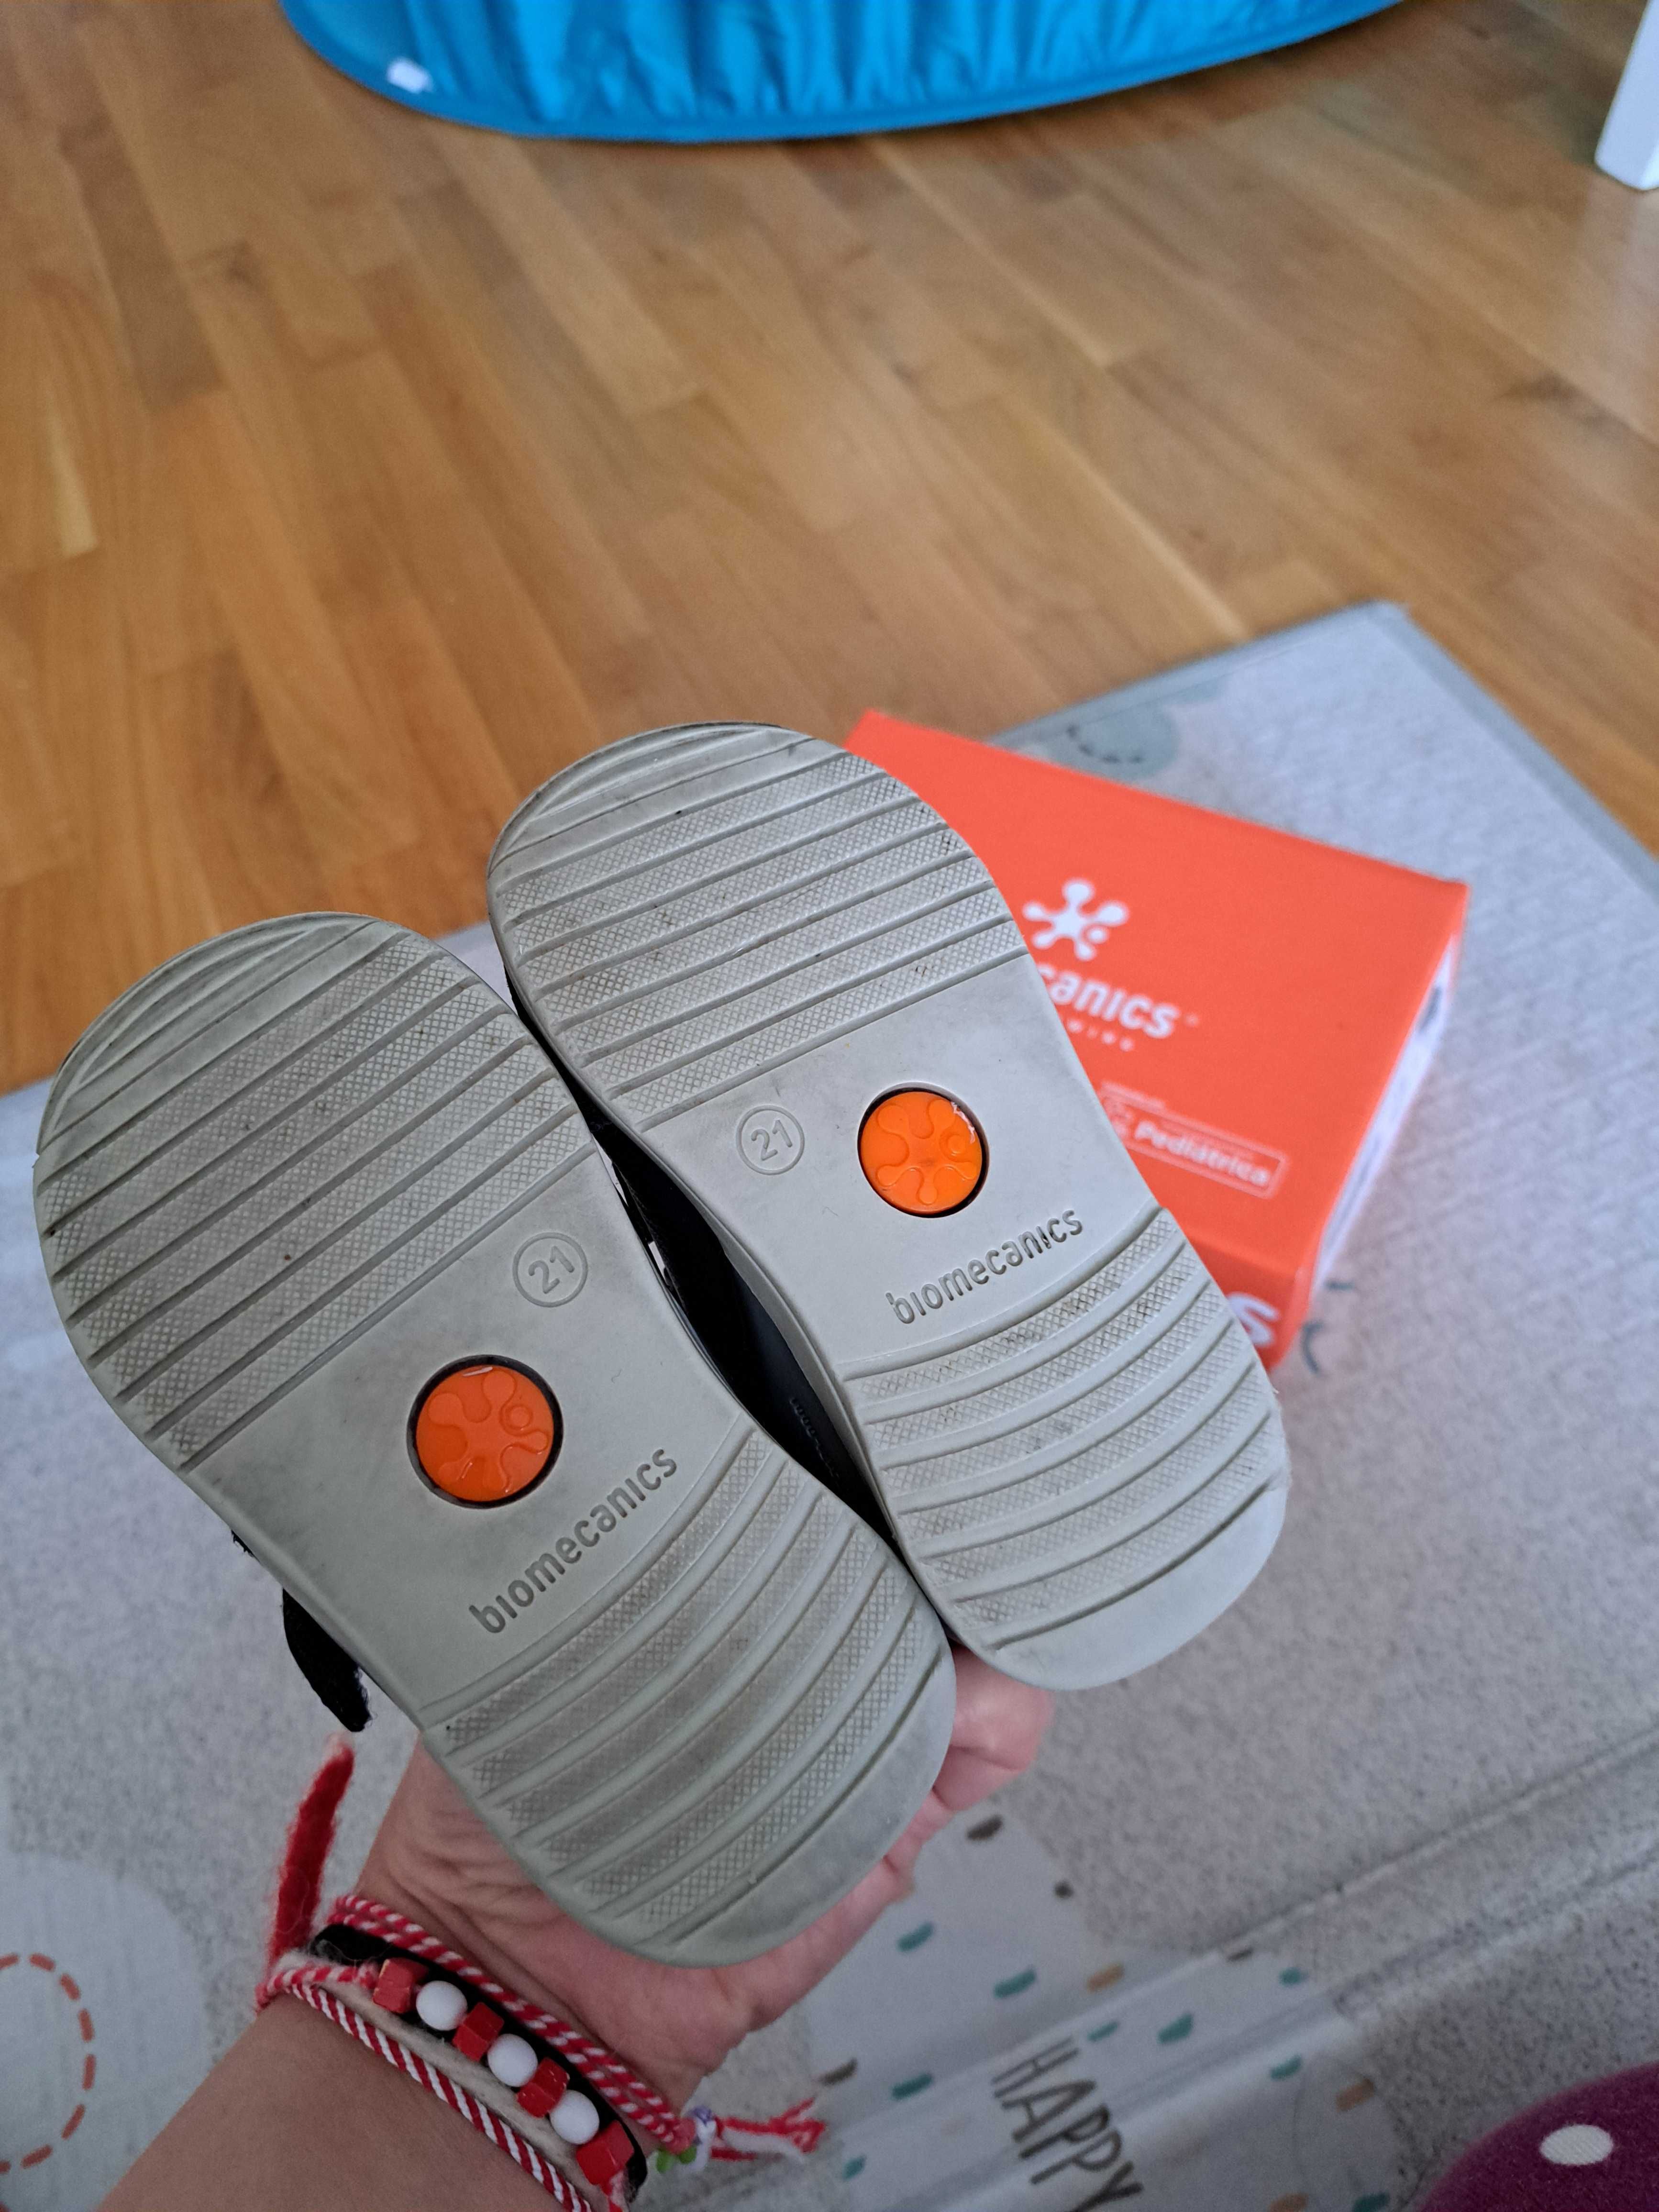 Бебешки обувки Biomechanics 21 размер